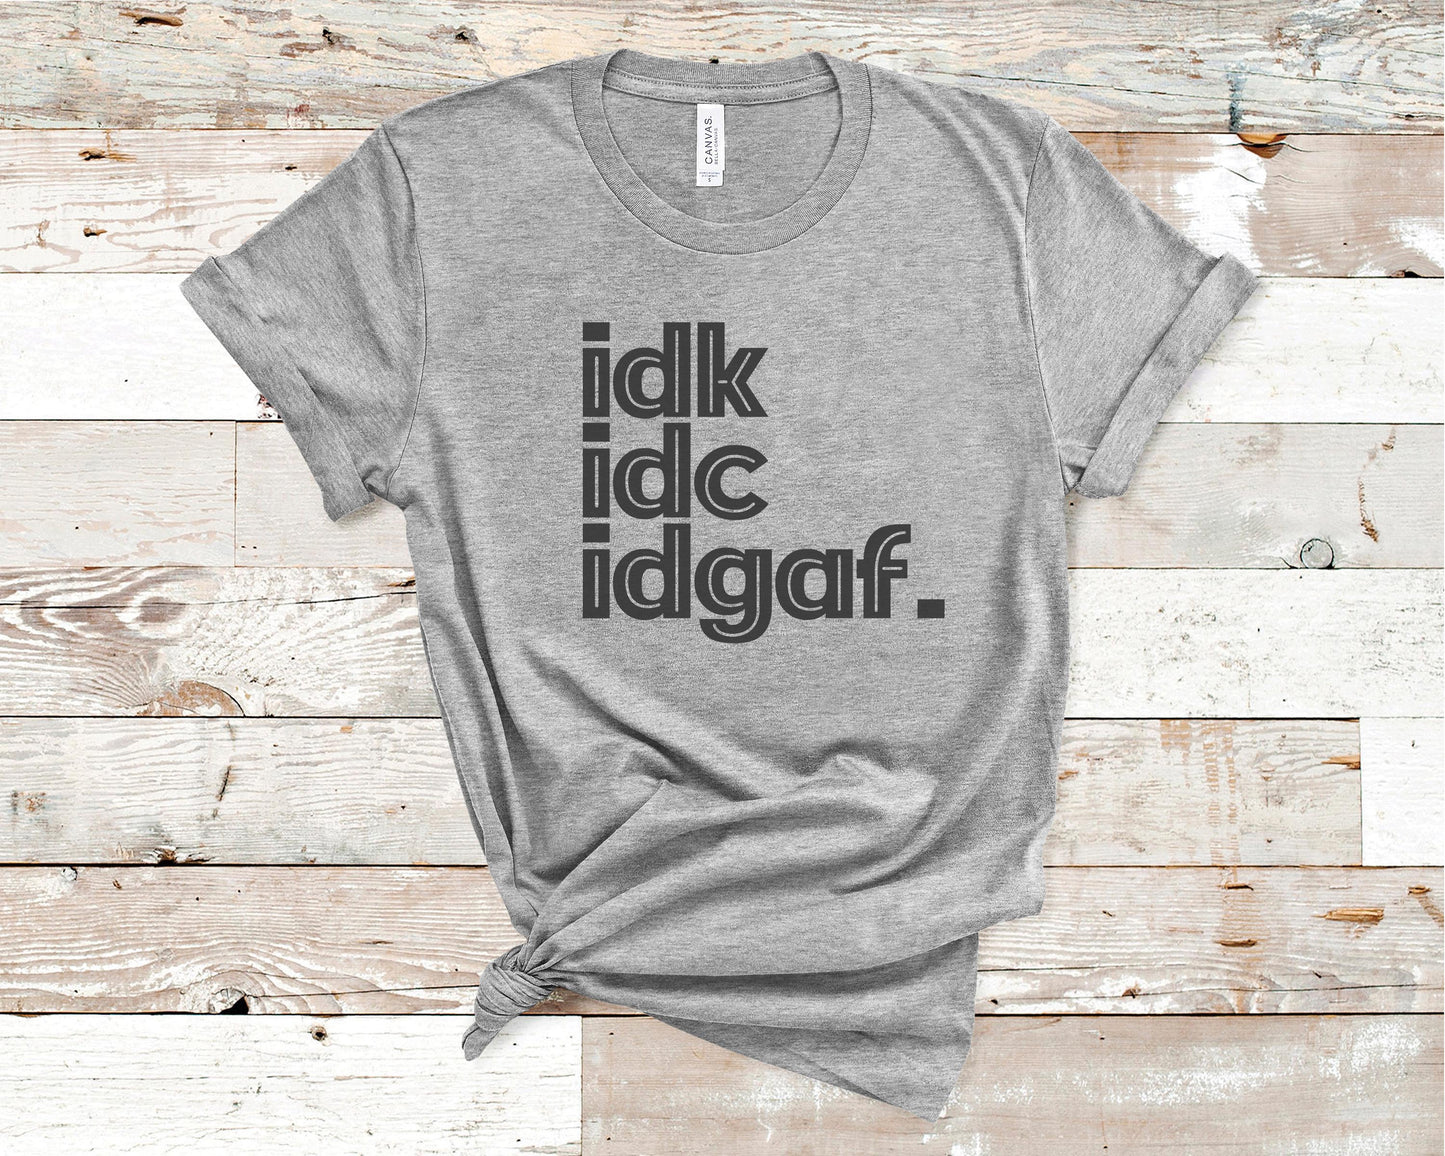 IDK IDC IDGAF 2 - Funny/ Sarcastic